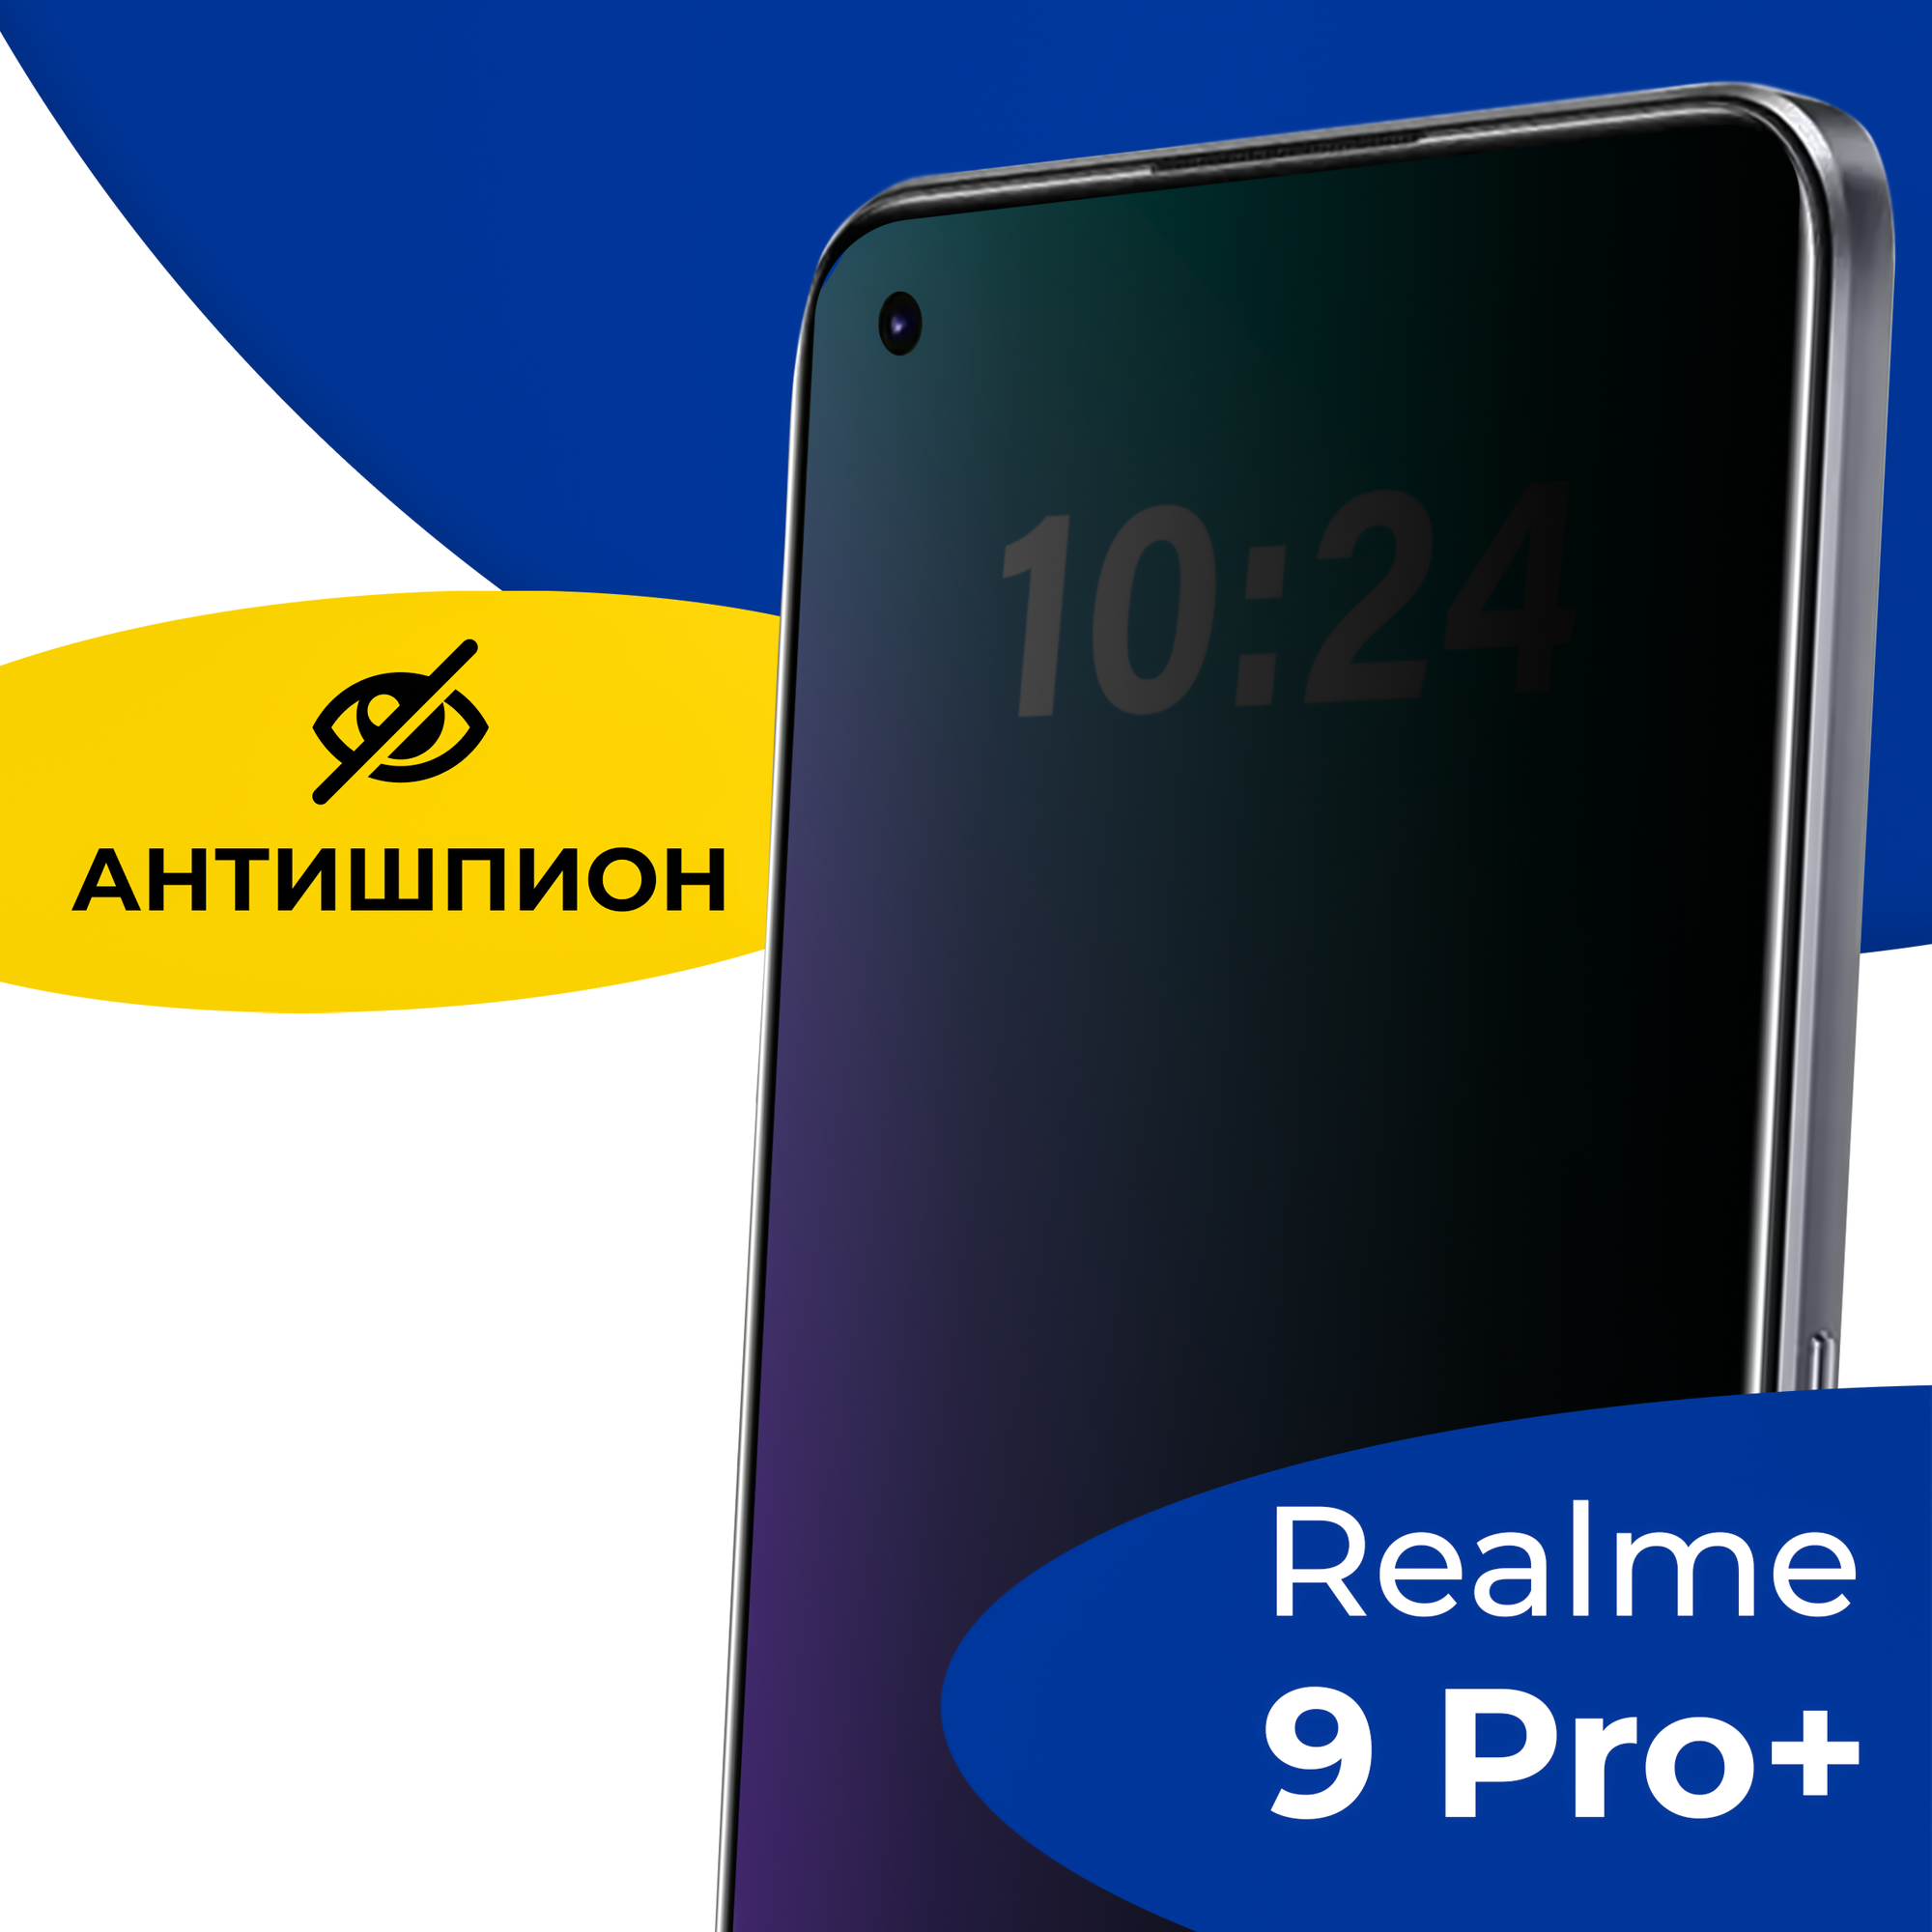 Защитное стекло Антишпион для телефона Realme 9 Pro Plus / Противоударное полноэкранное стекло 5D на смартфон Реалми 9 Про Плюс / Черное